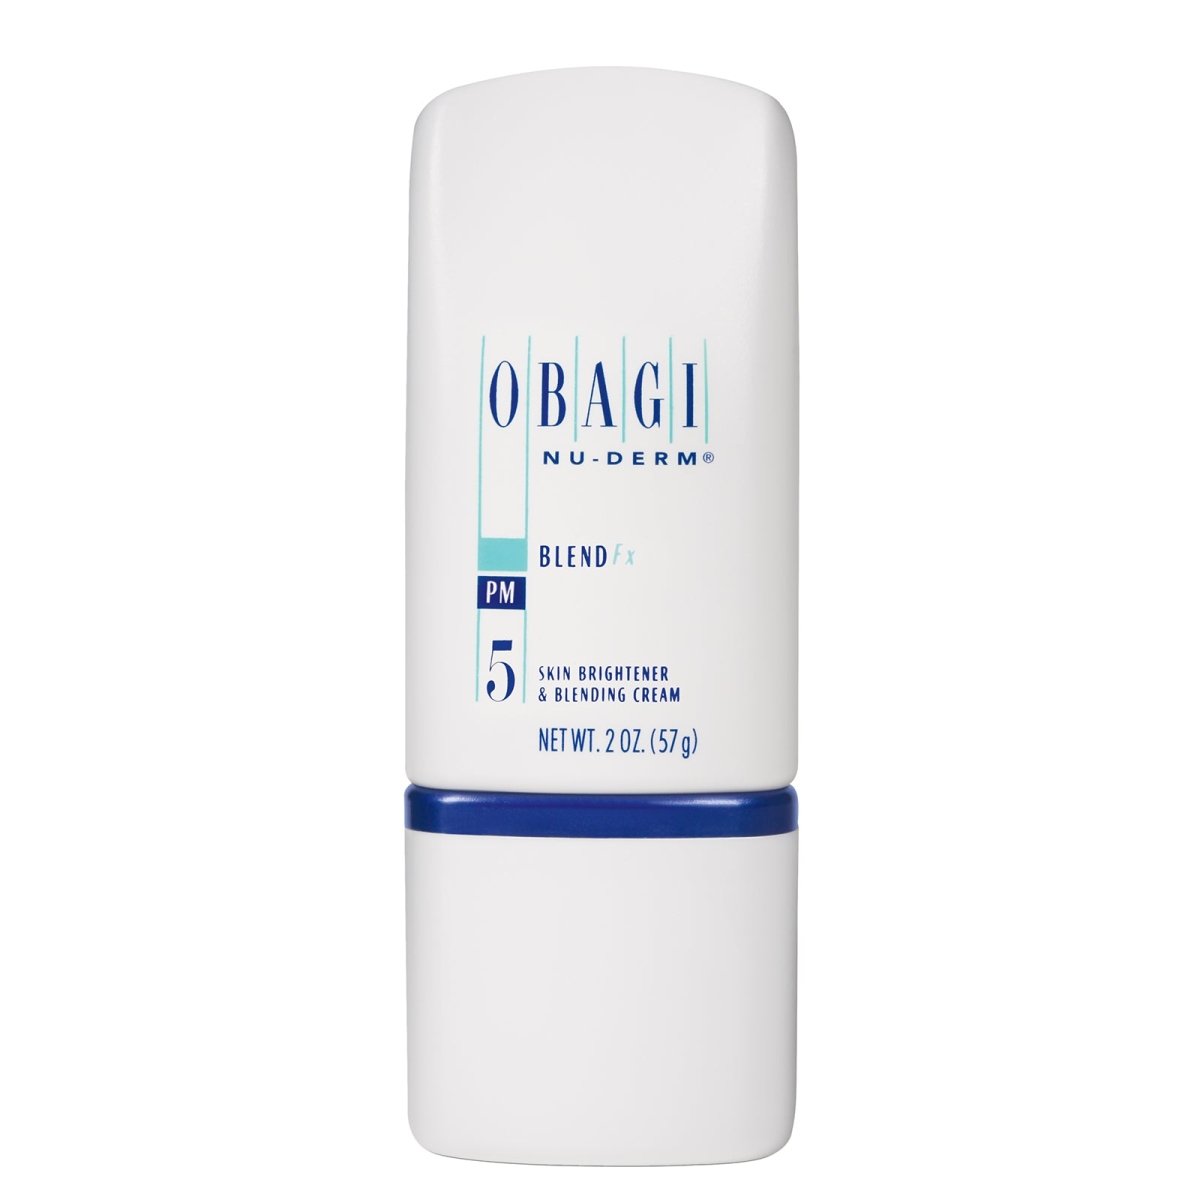 Obagi Nu-Derm® Blend Fx - SkincareEssentials